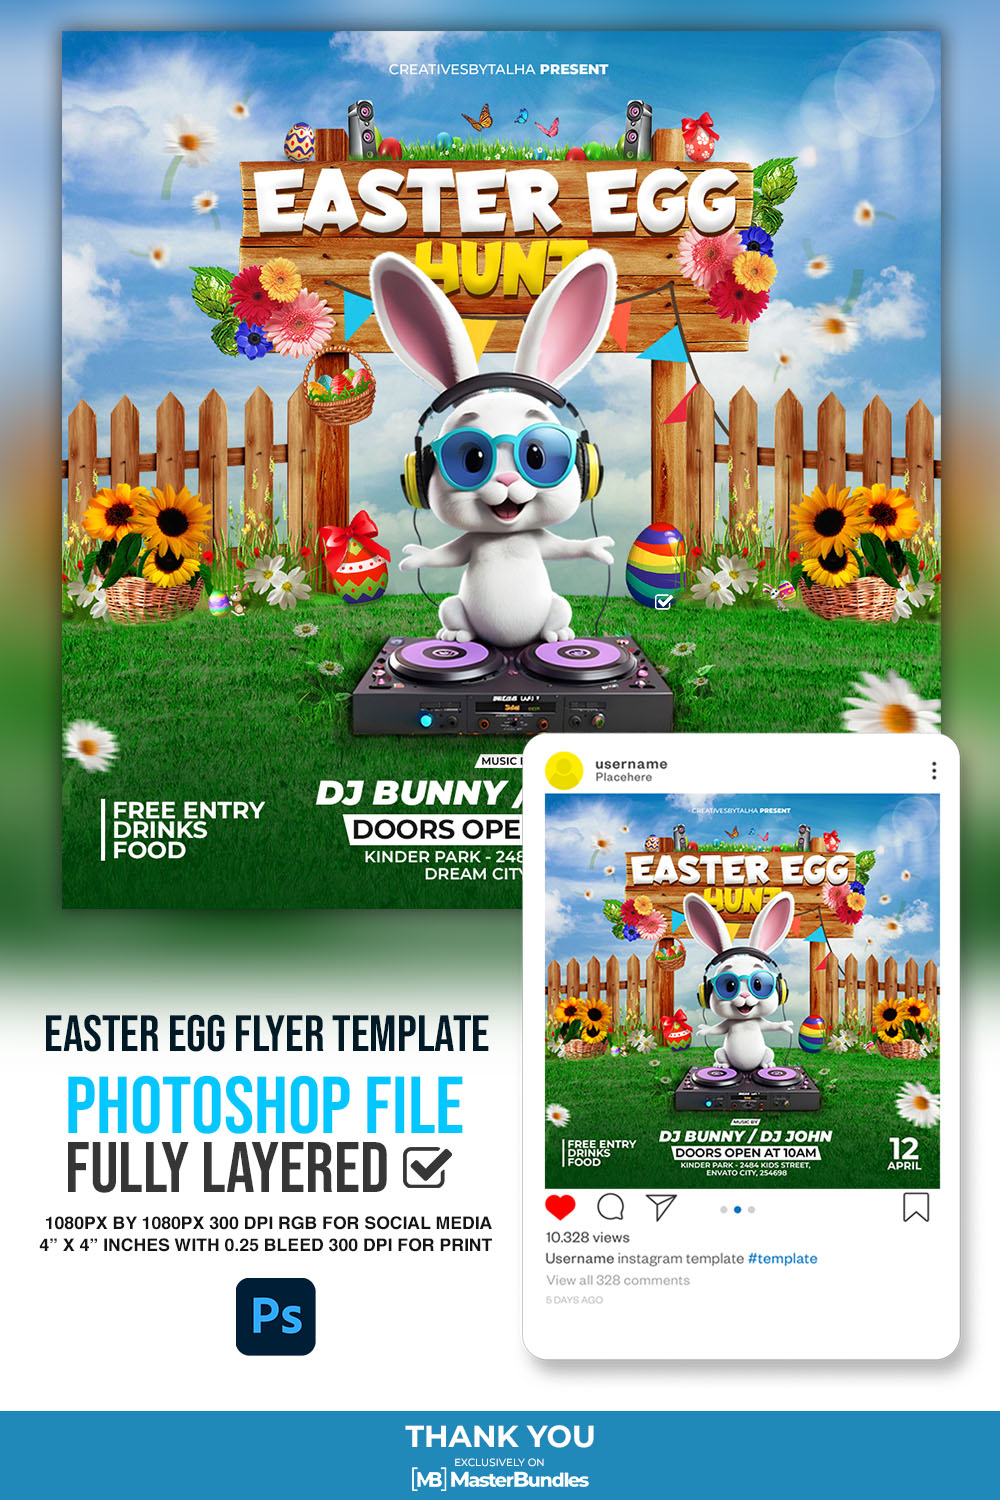 Easter Egg Flyer Template pinterest preview image.